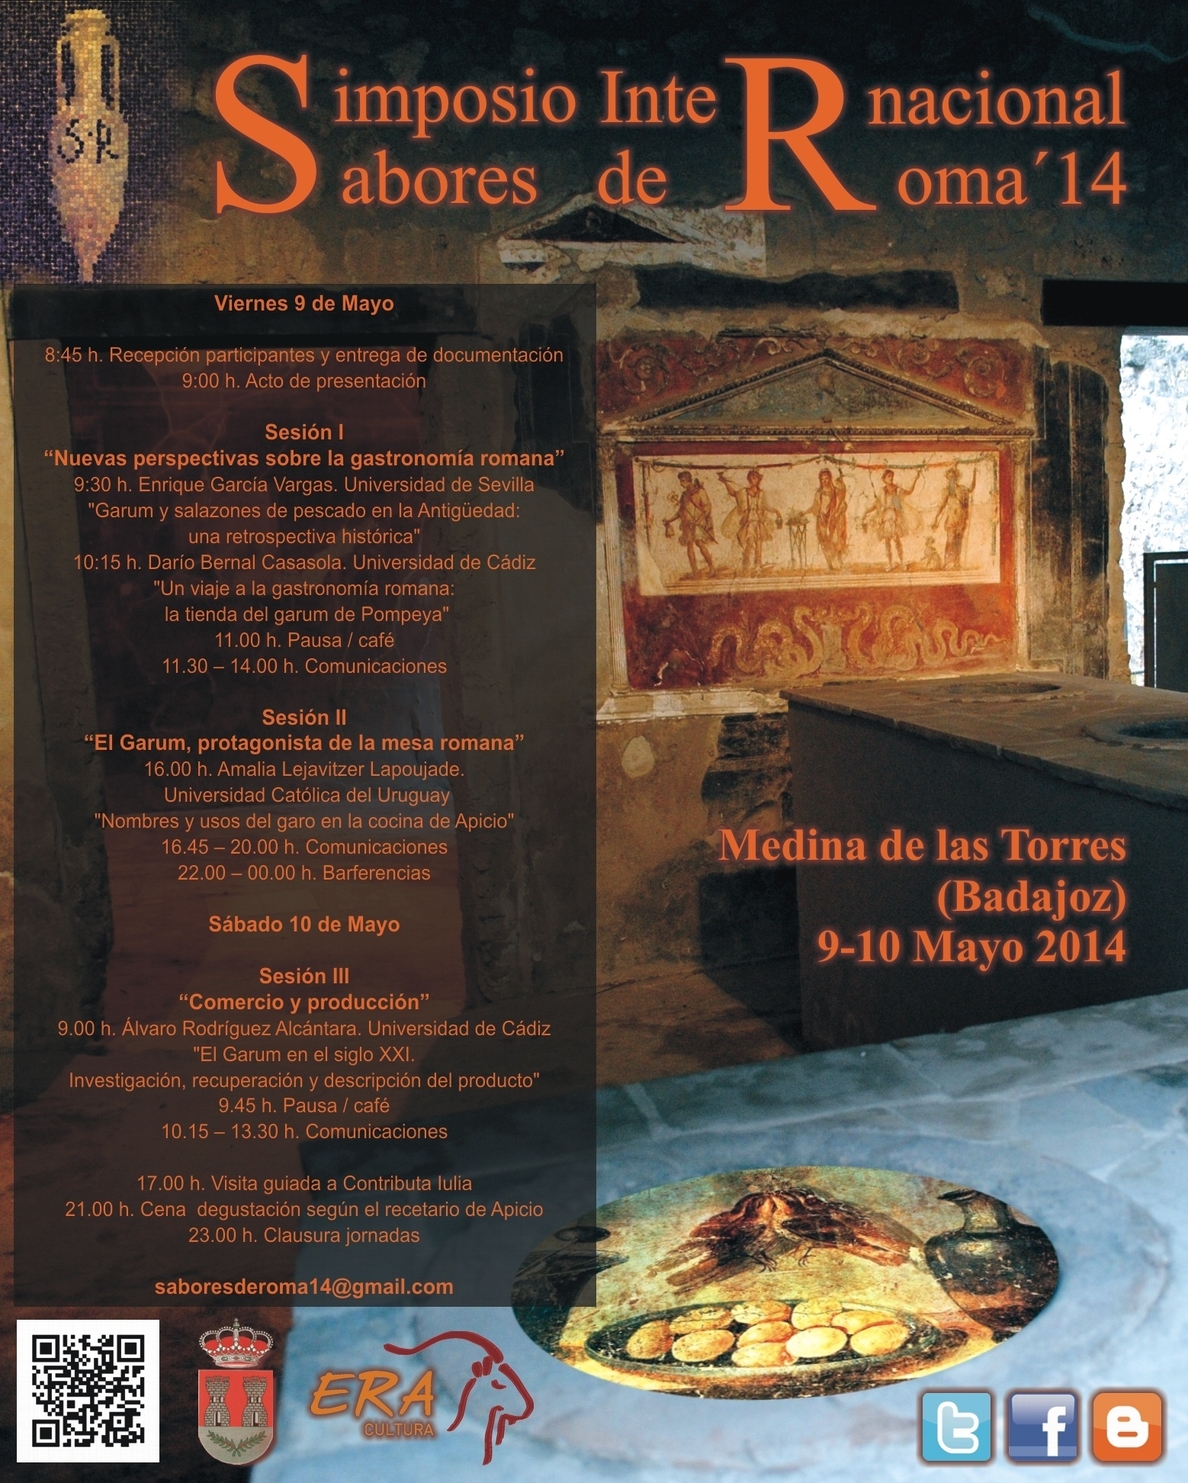 Medina de las Torres (Badajoz) celebrará un simposio internacional sobre gastronomía antigua romana